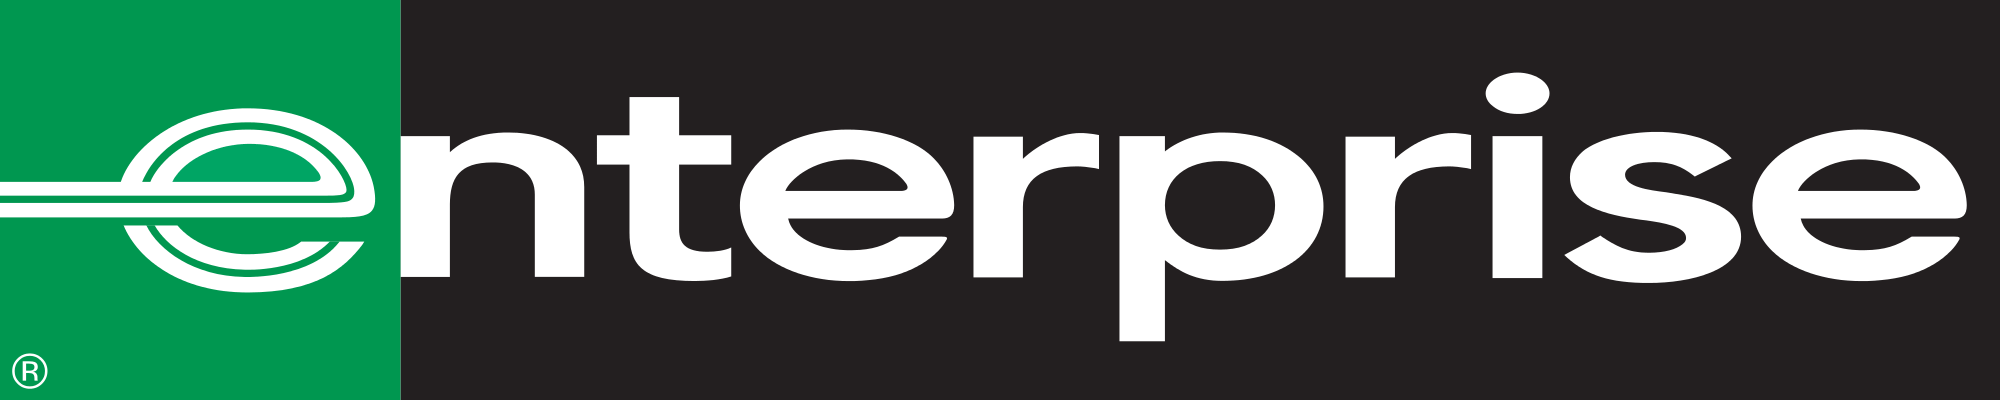 Enterprise logo - Links Enterprise Website 